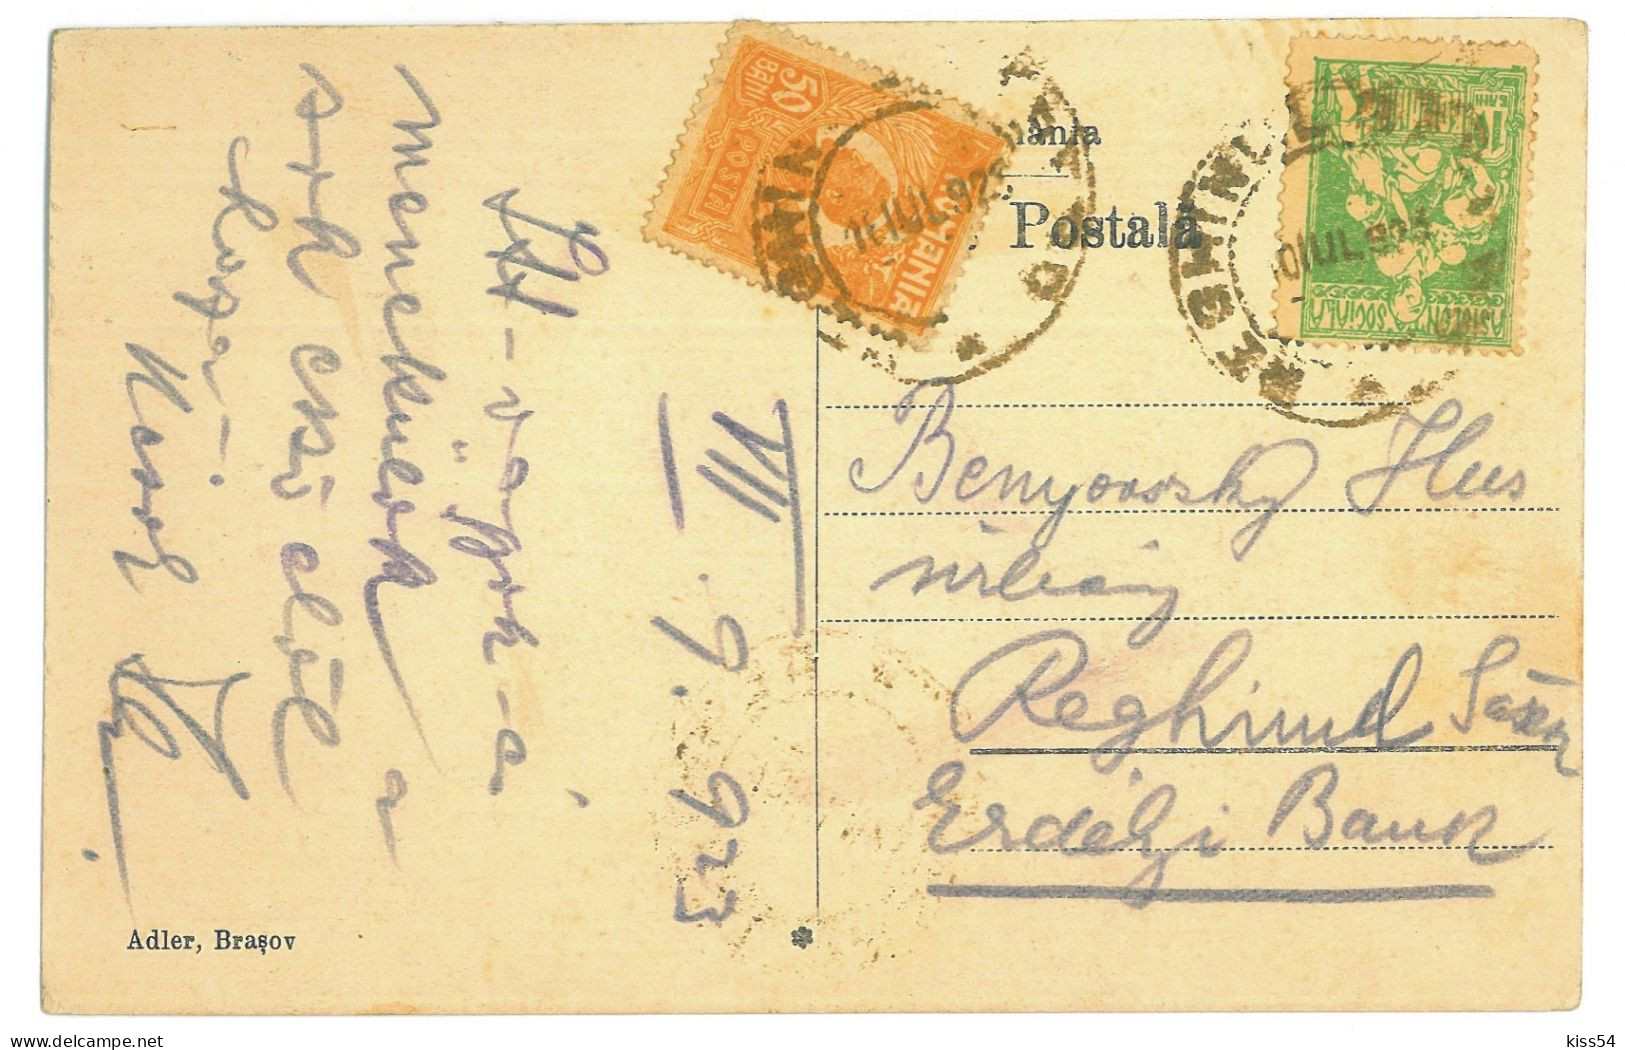 RO 47 - 23735 TUSNAD, Harghita, Multi Vue, Romania - Old Postcard - Used - 1923 - Romania